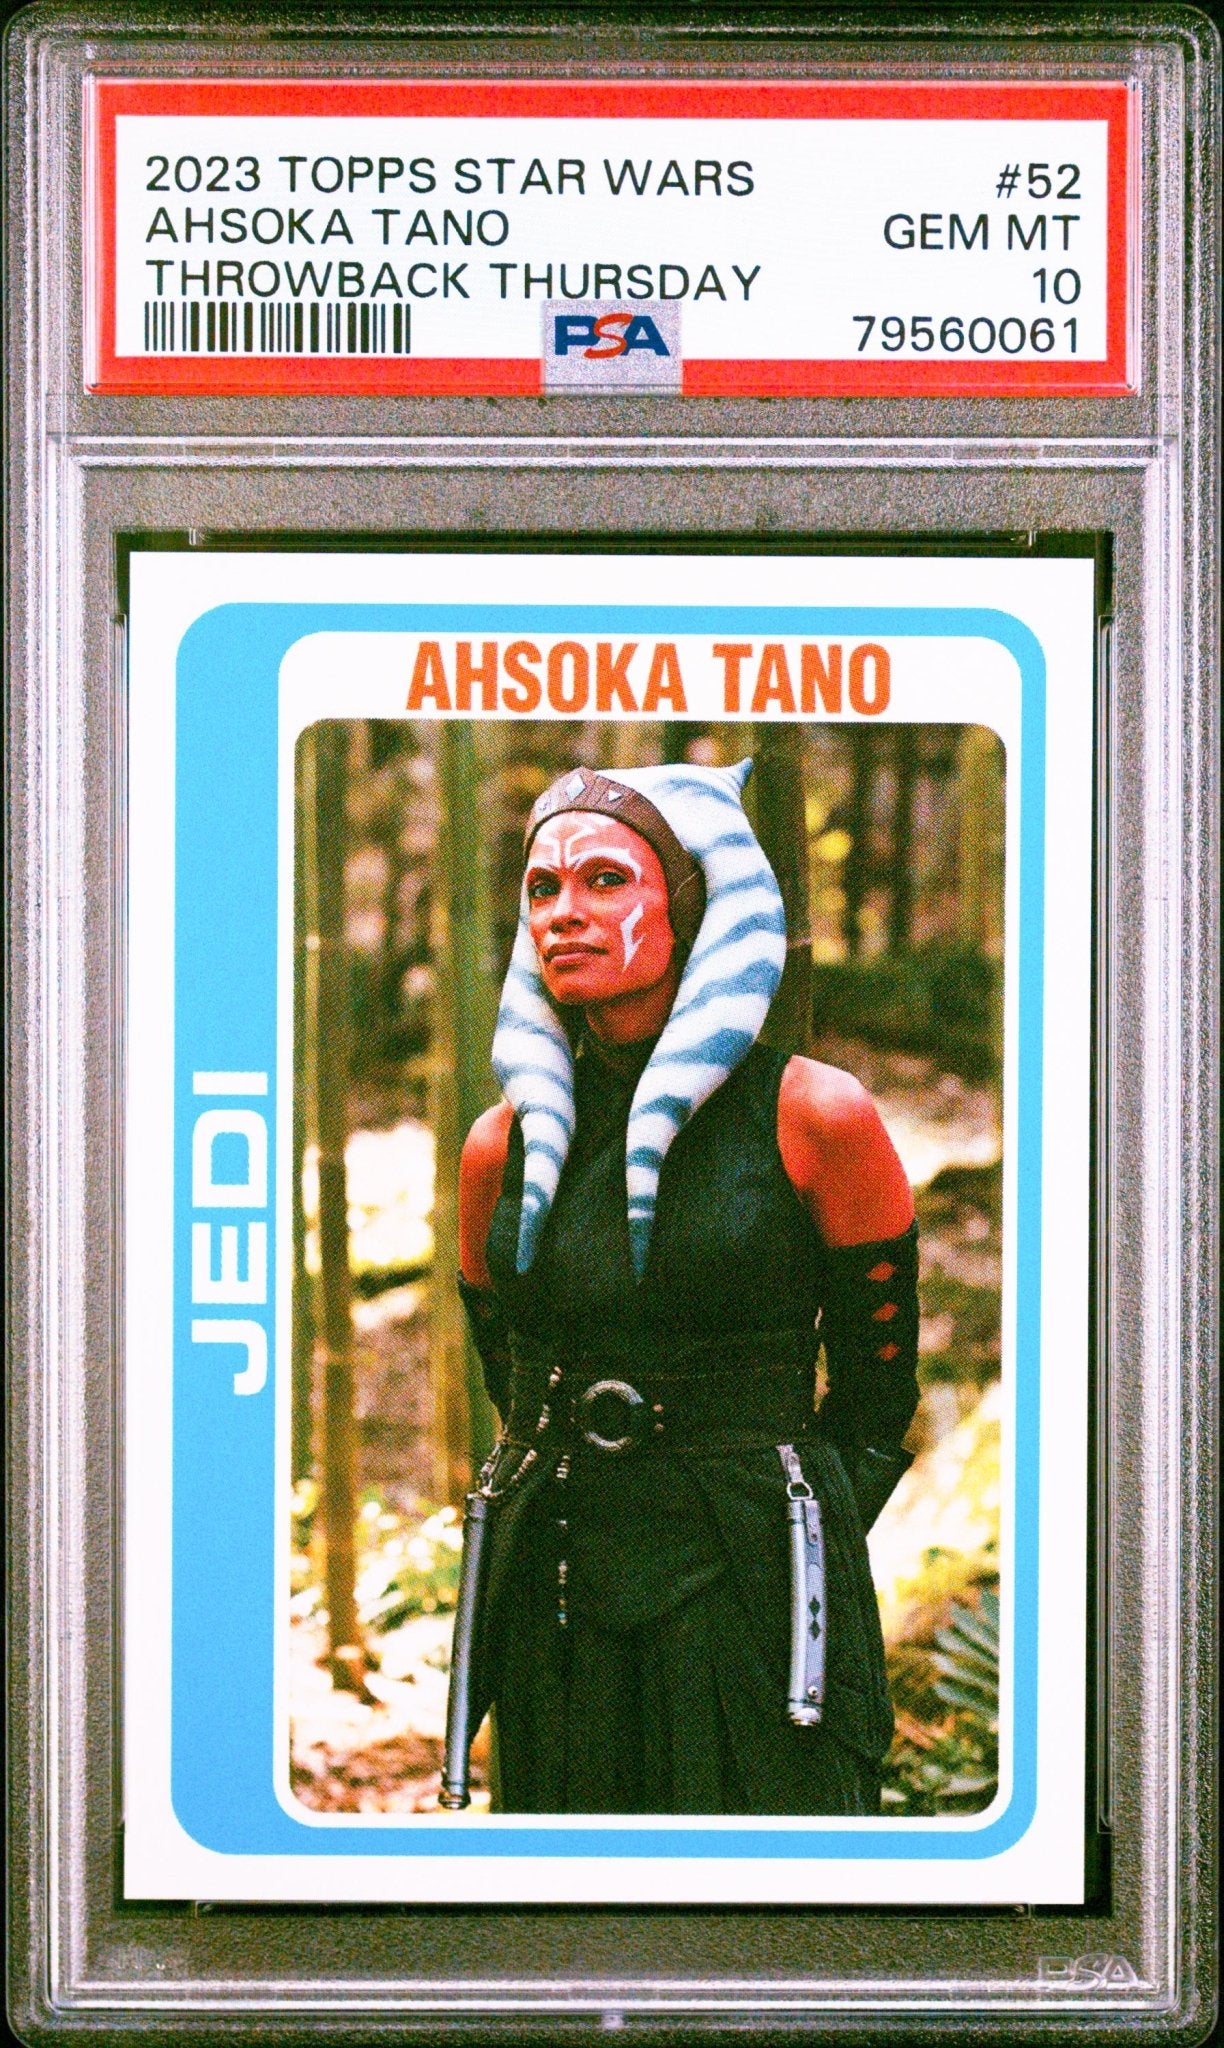 AHSOKA TANO PSA 10 2023 Topps Star Wars Throwback Thursday TBT #52 C3 Star Wars Base Graded Cards - Hobby Gems